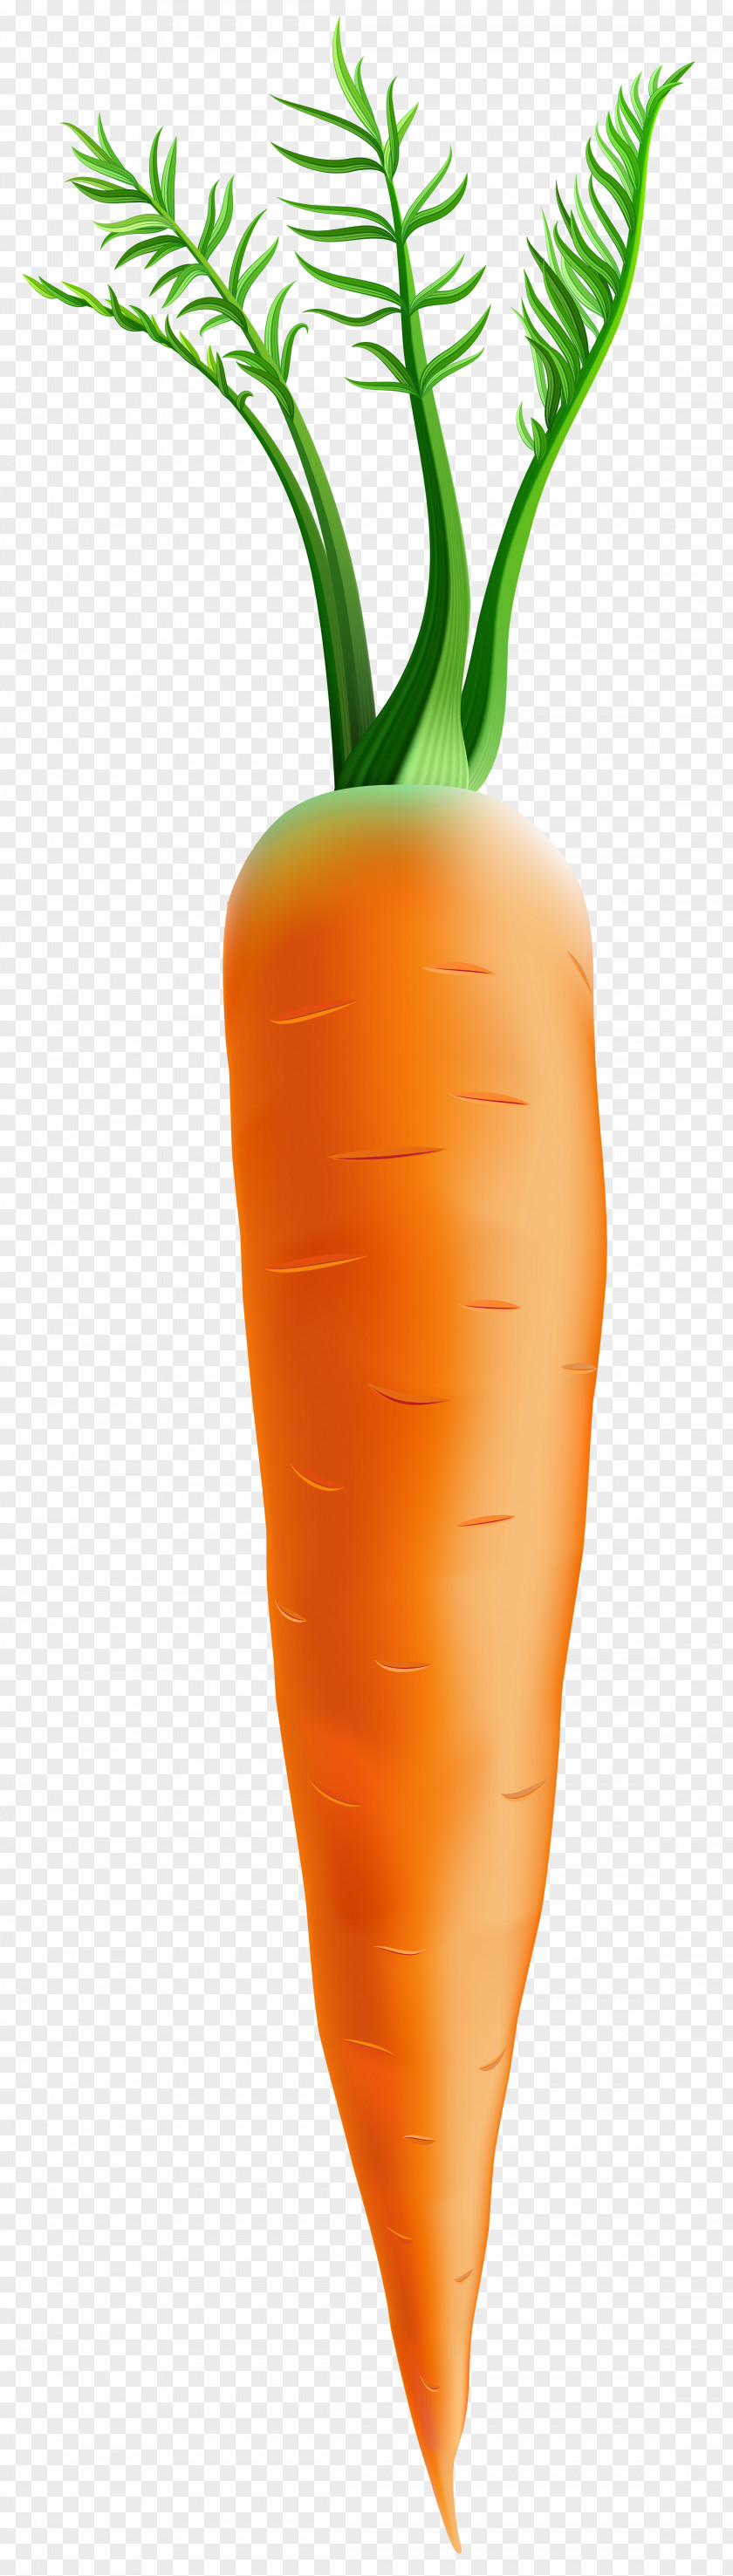 Carrot Clip Art Image Orange Flowerpot PNG